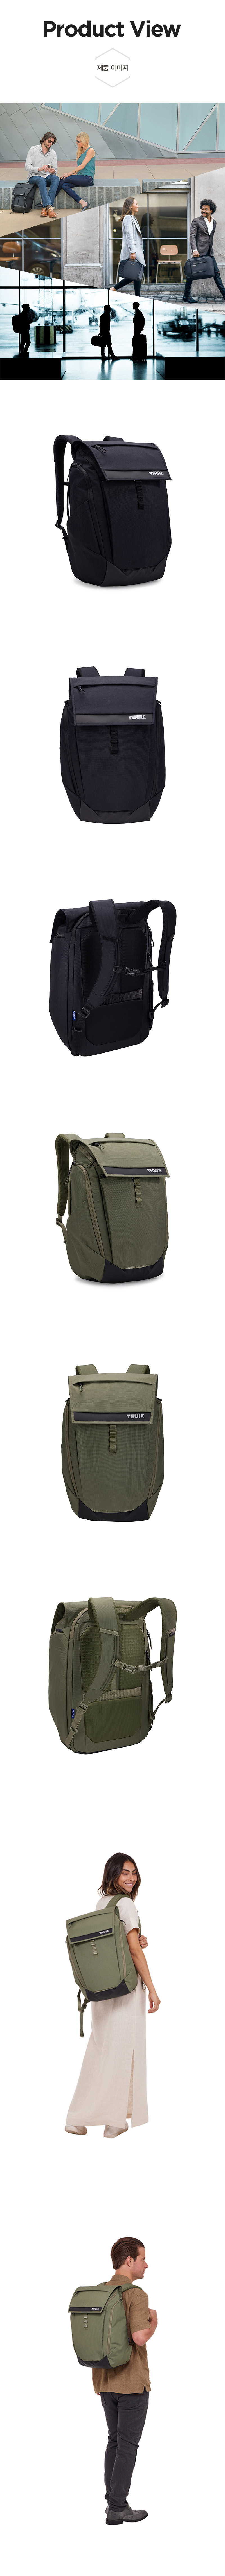 paramount-backpack-27l-03.jpg